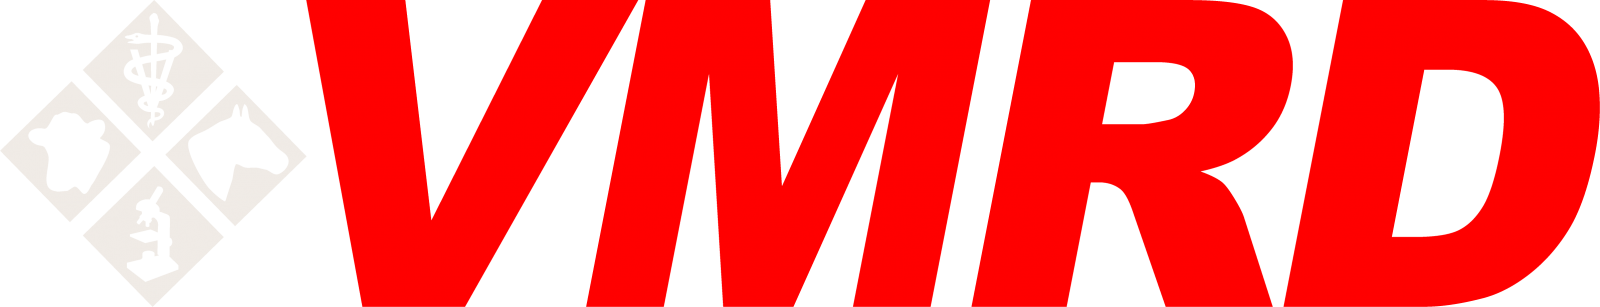 VMRD's old logo - bold, slanted, sans-serif font "VMRD" and diamond shape icon